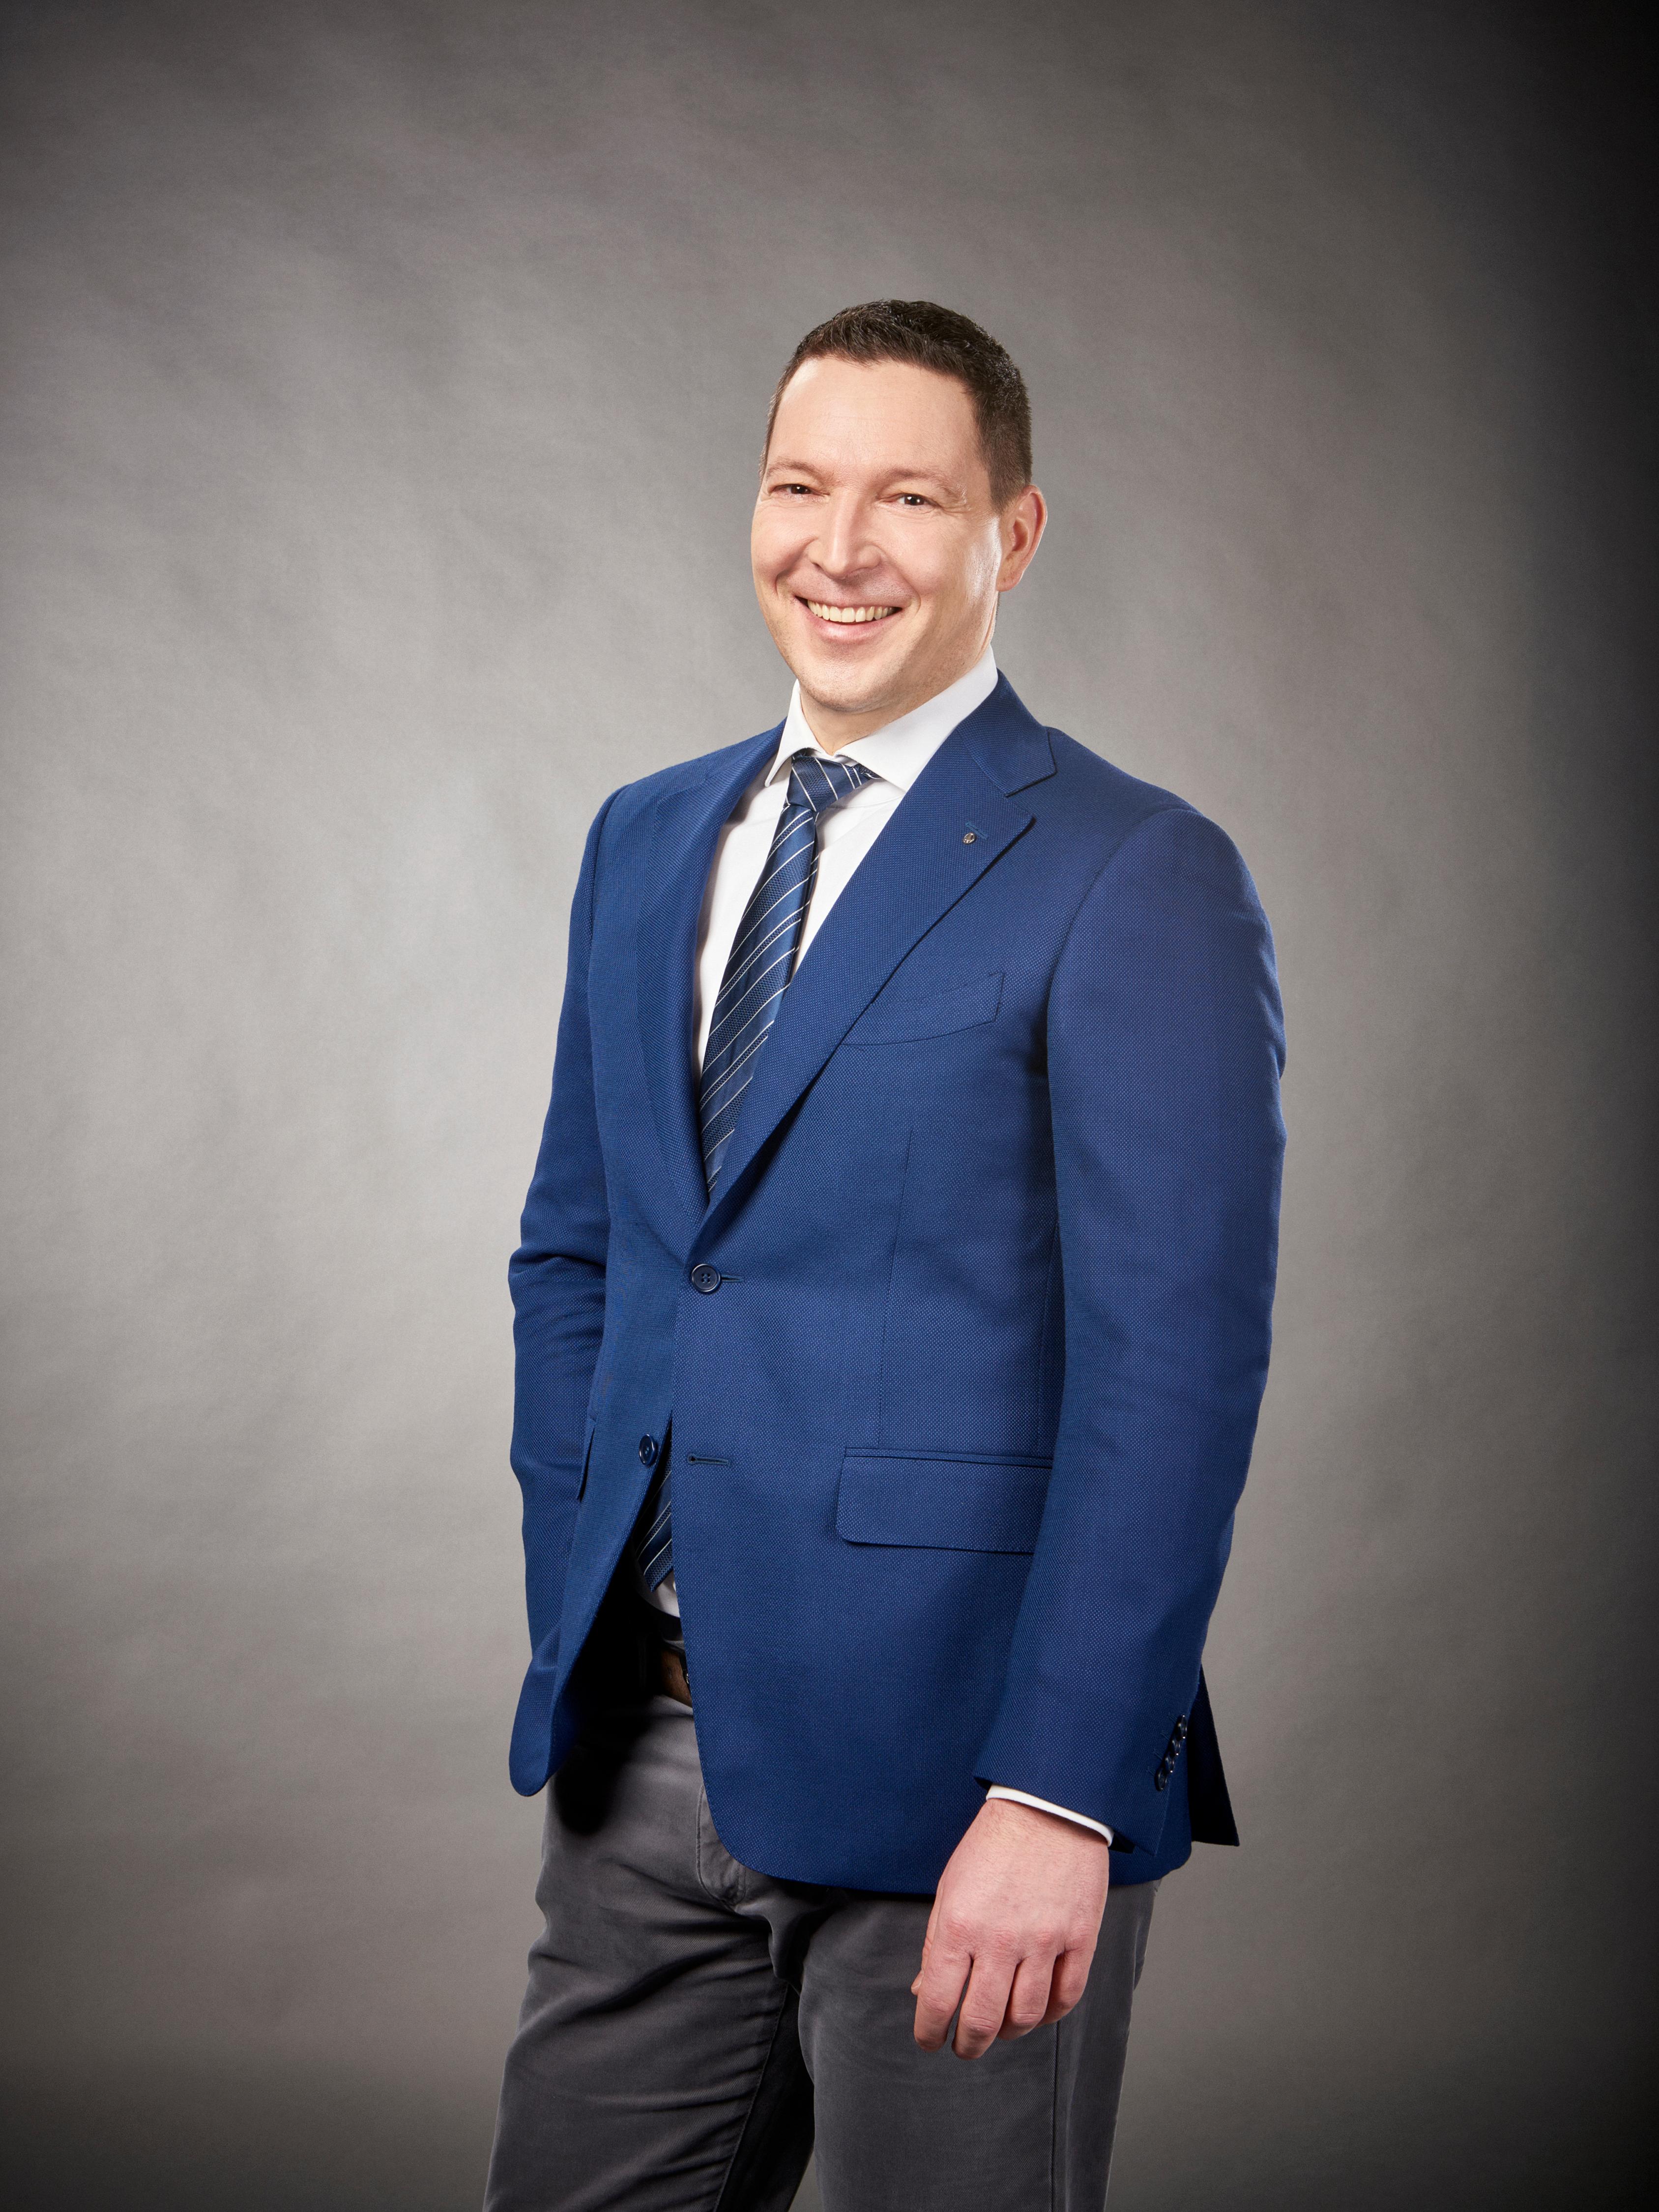 XpatLoop Interview: Mr. Zsolt Szalay, Sales CEO of SPAR Hungary